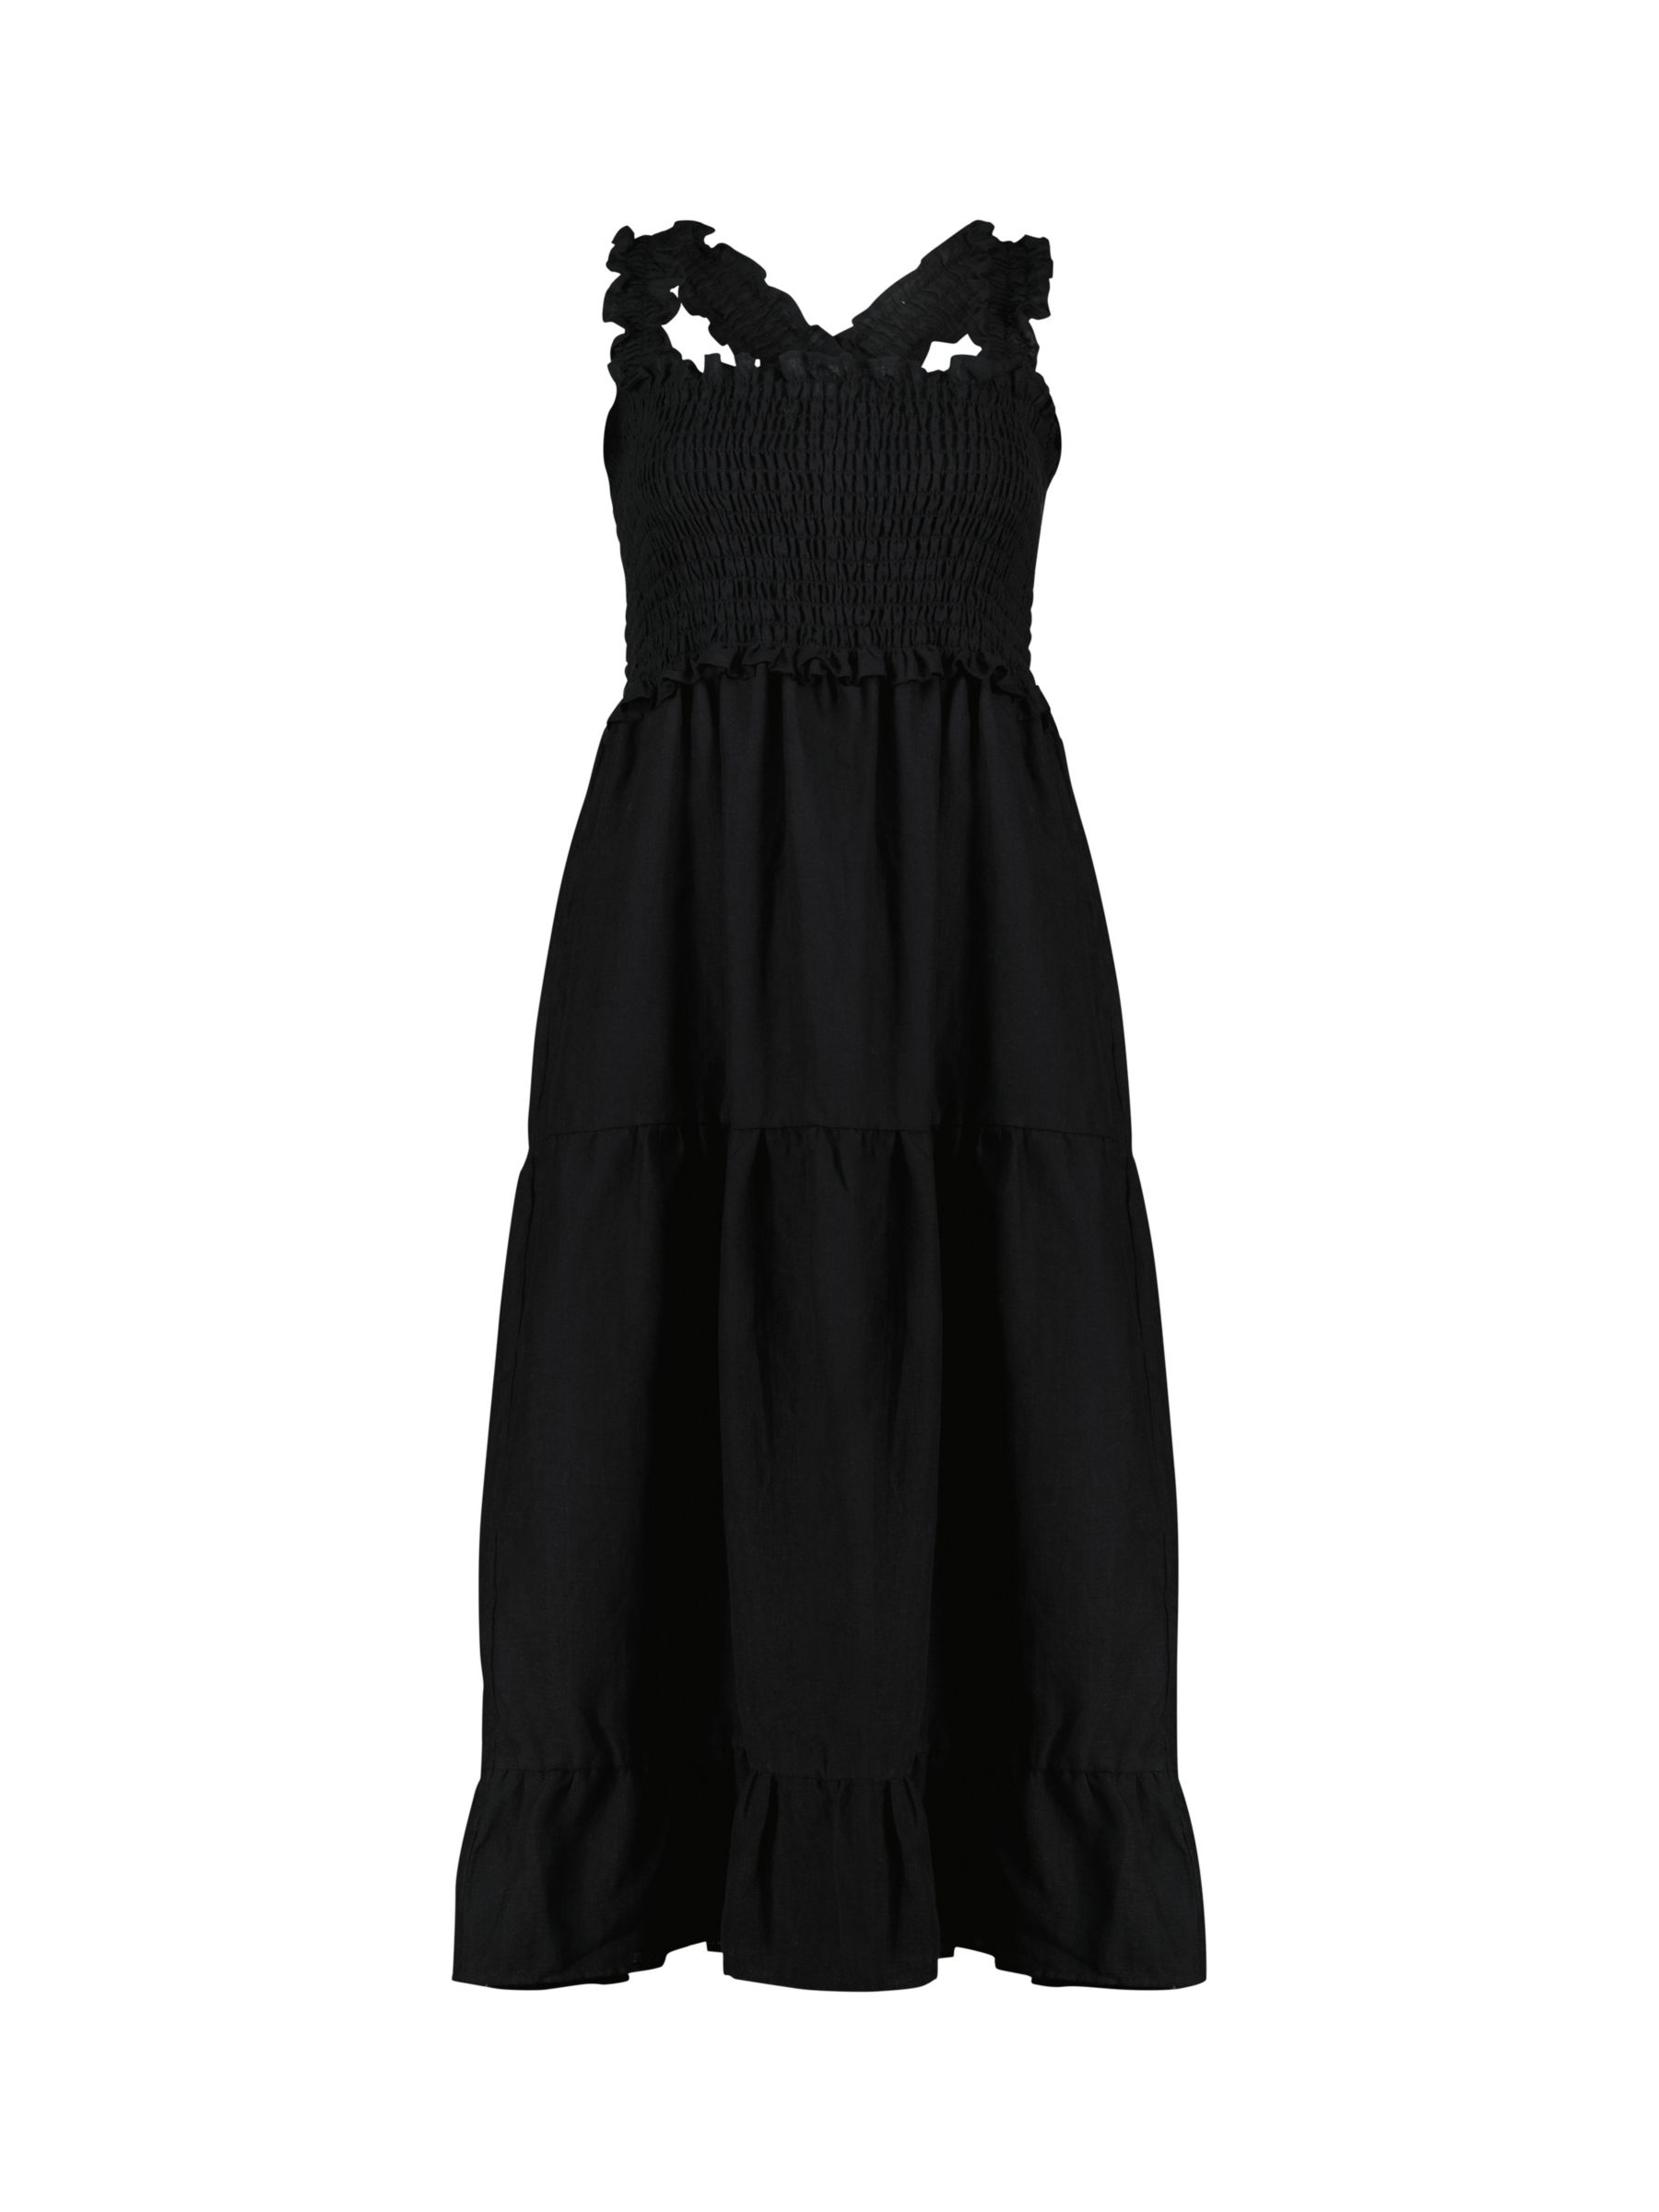 Baukjen Braylee Hemp Dress, Black, 10